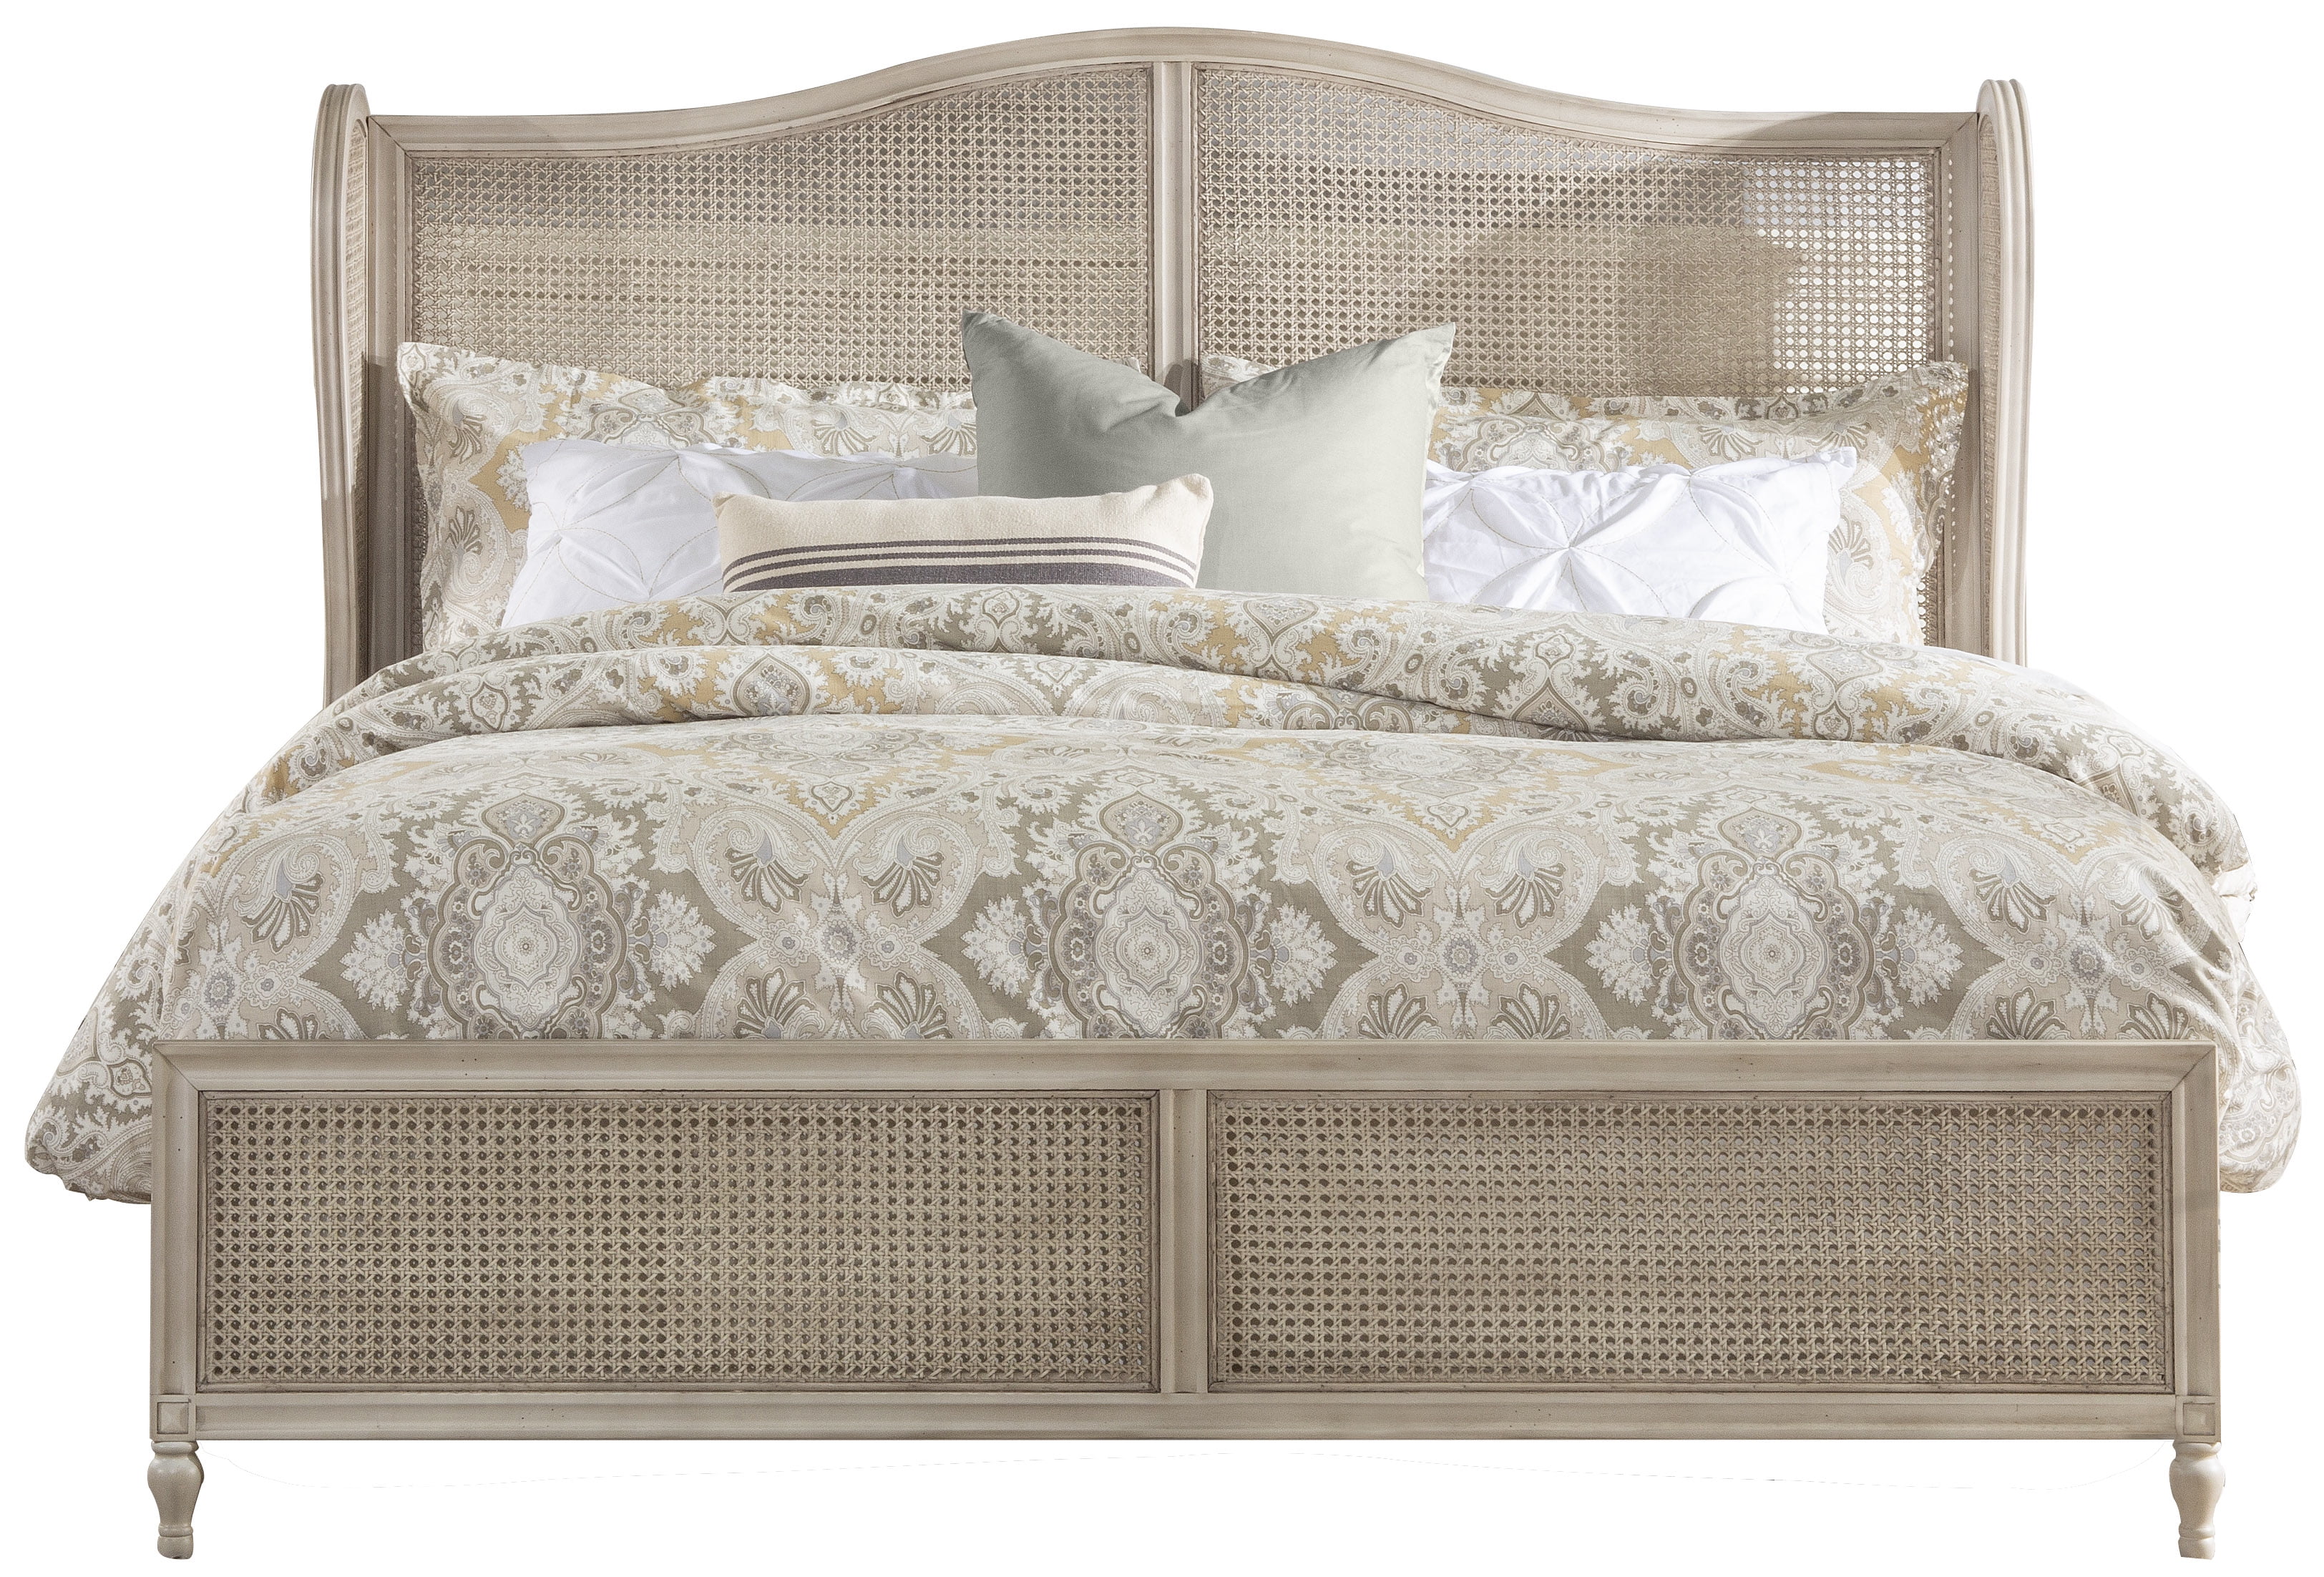 Hilale Furniture Sausalito King Cane, Antique White King Bed Frame